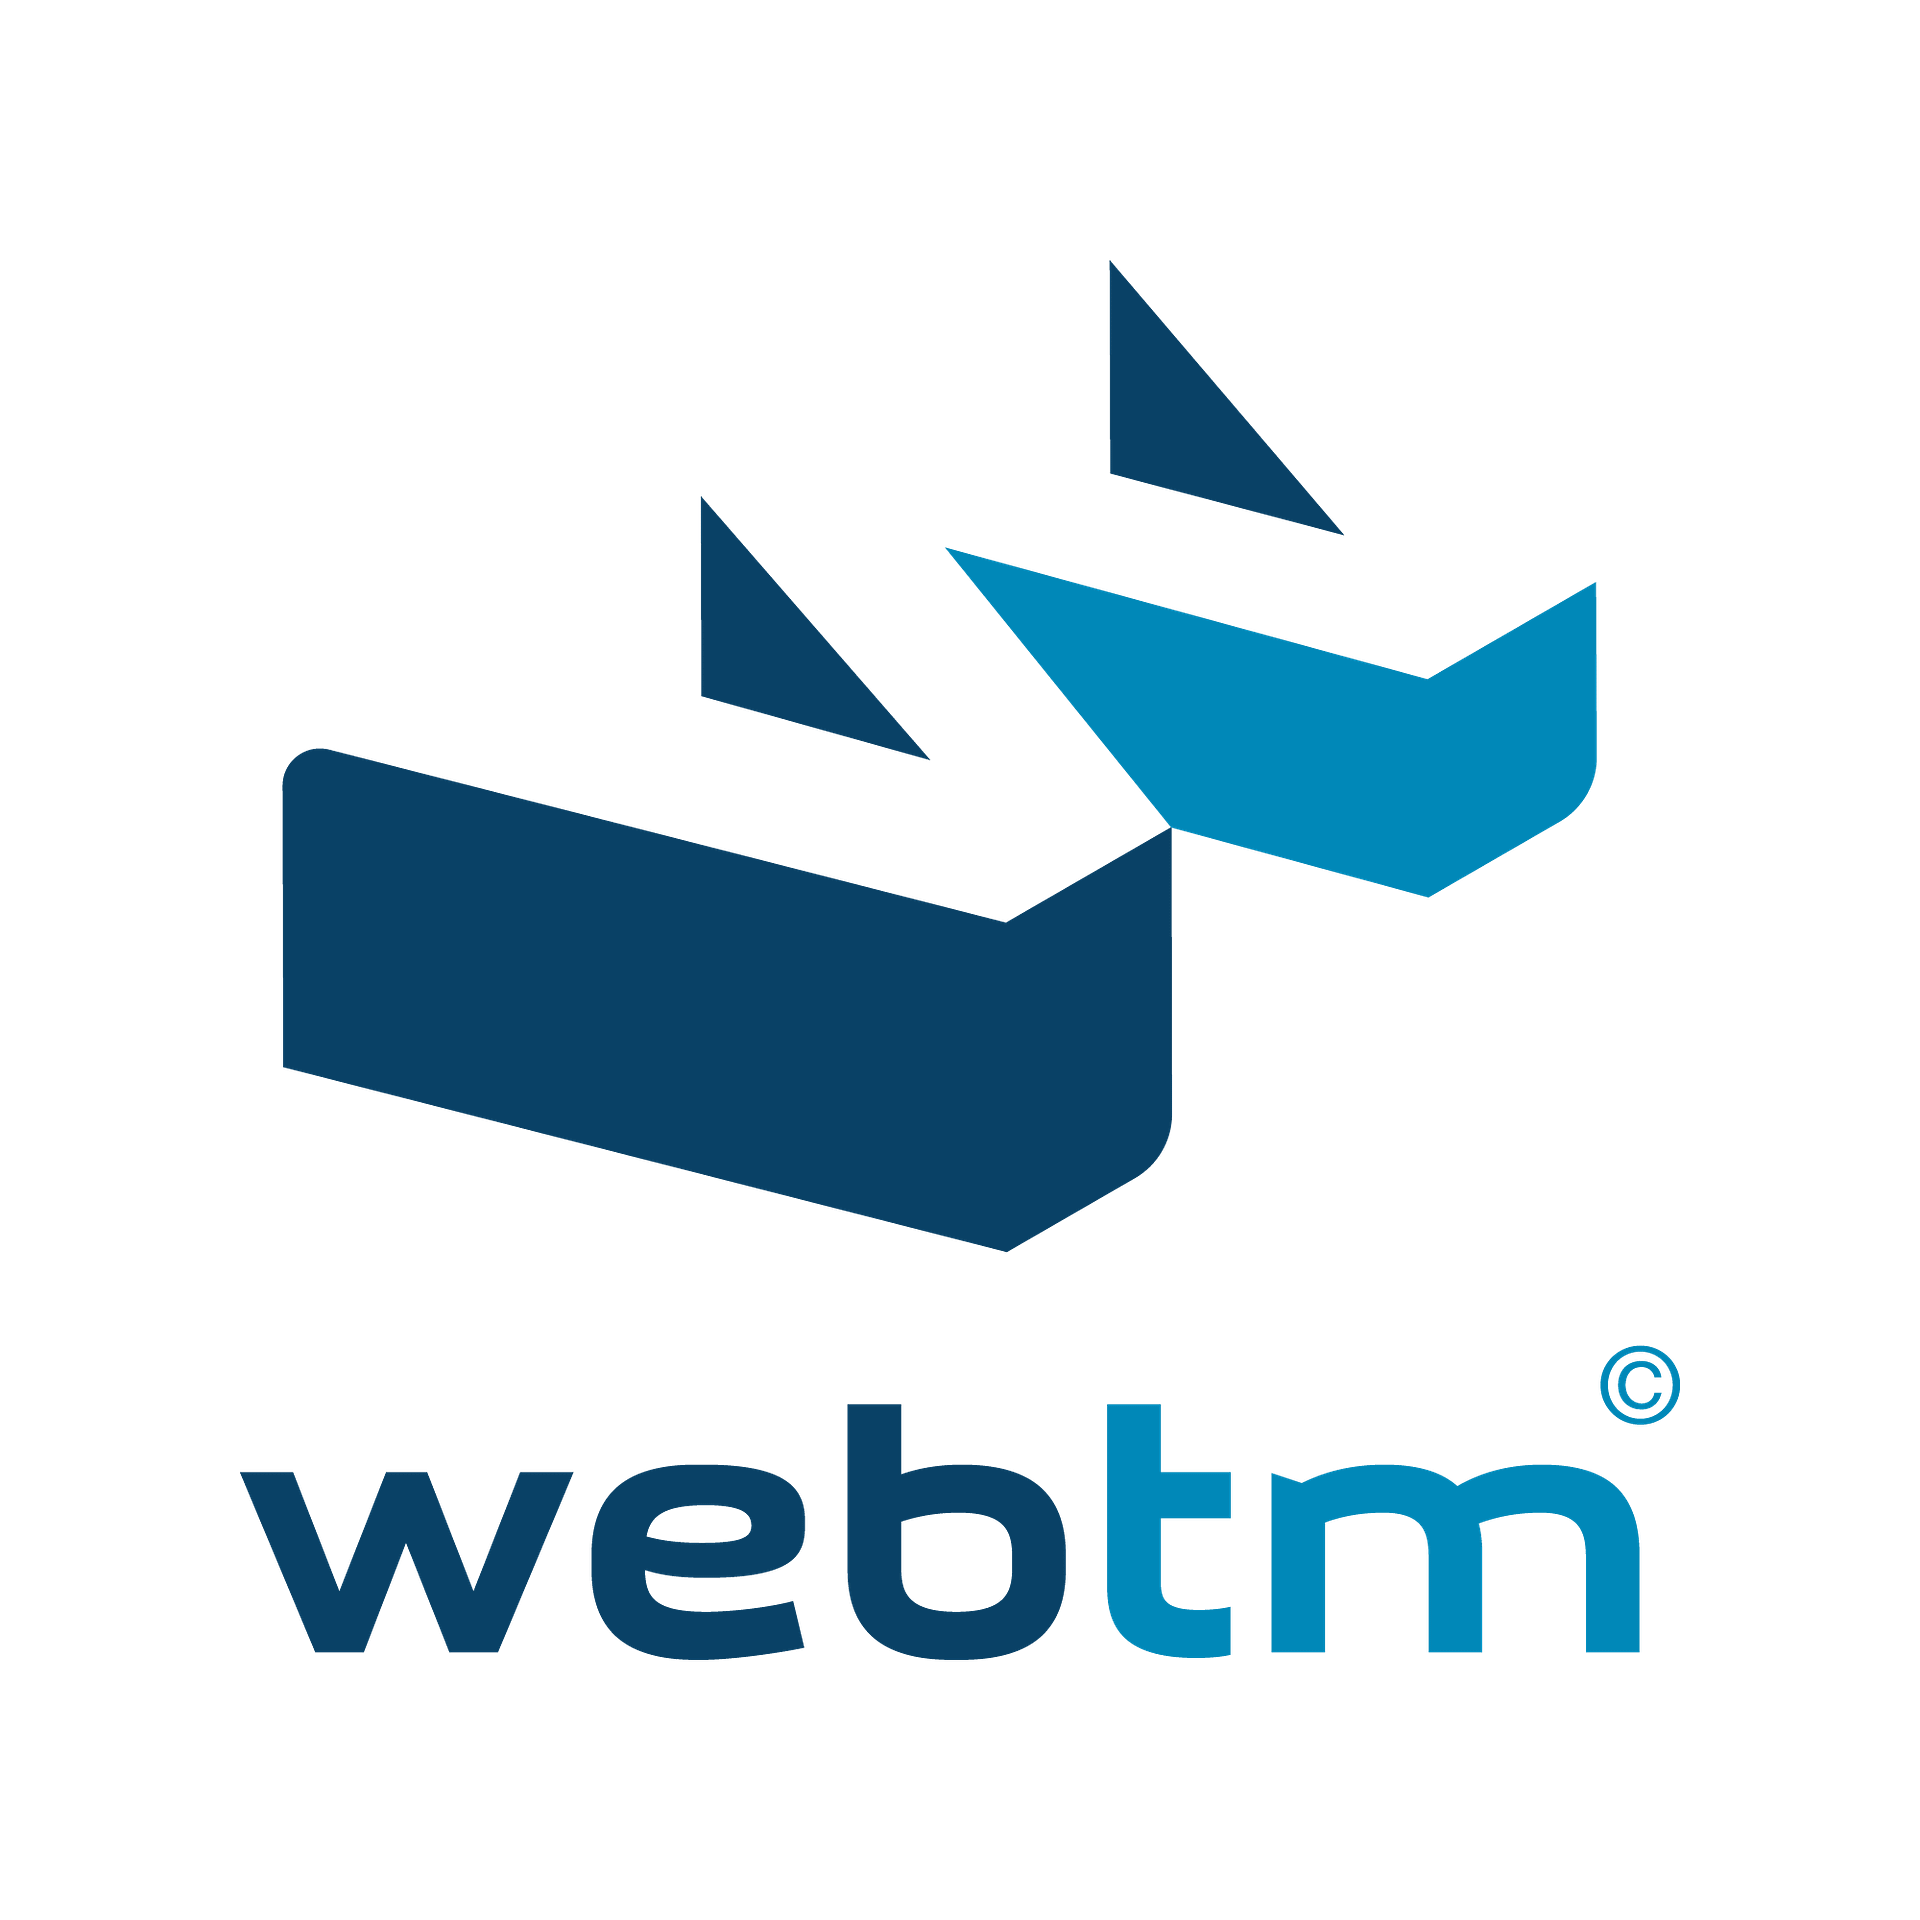 WebTM